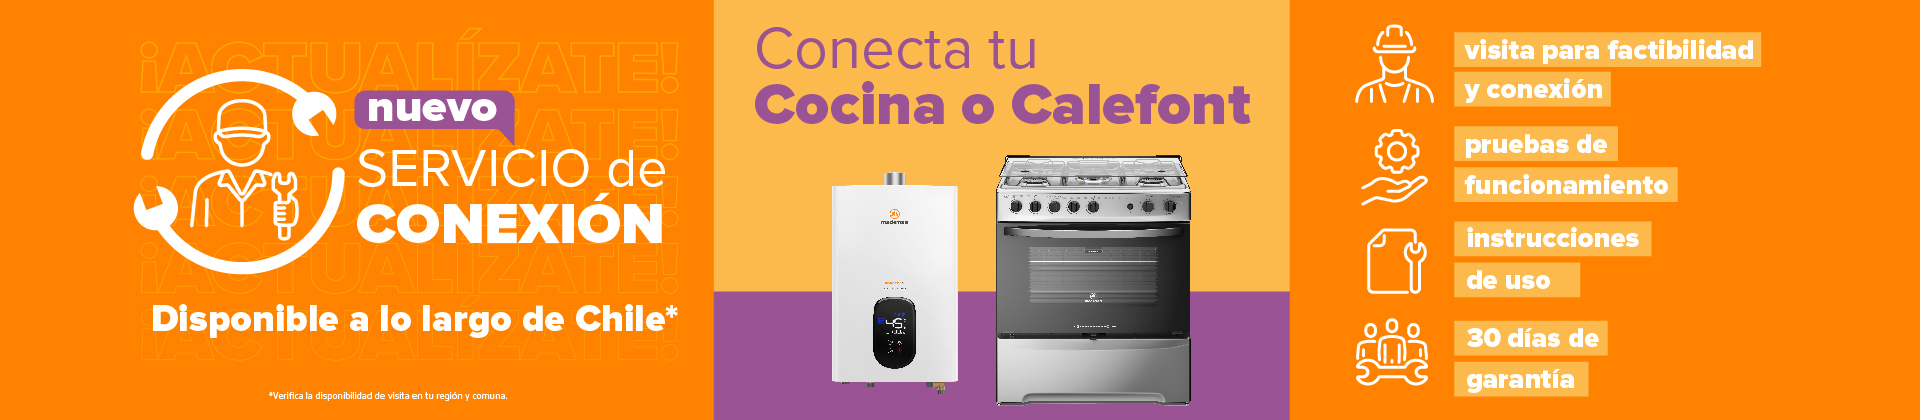 Nuevo Servicio de Conexión Mademsa - Conecta tu cocina o calefont